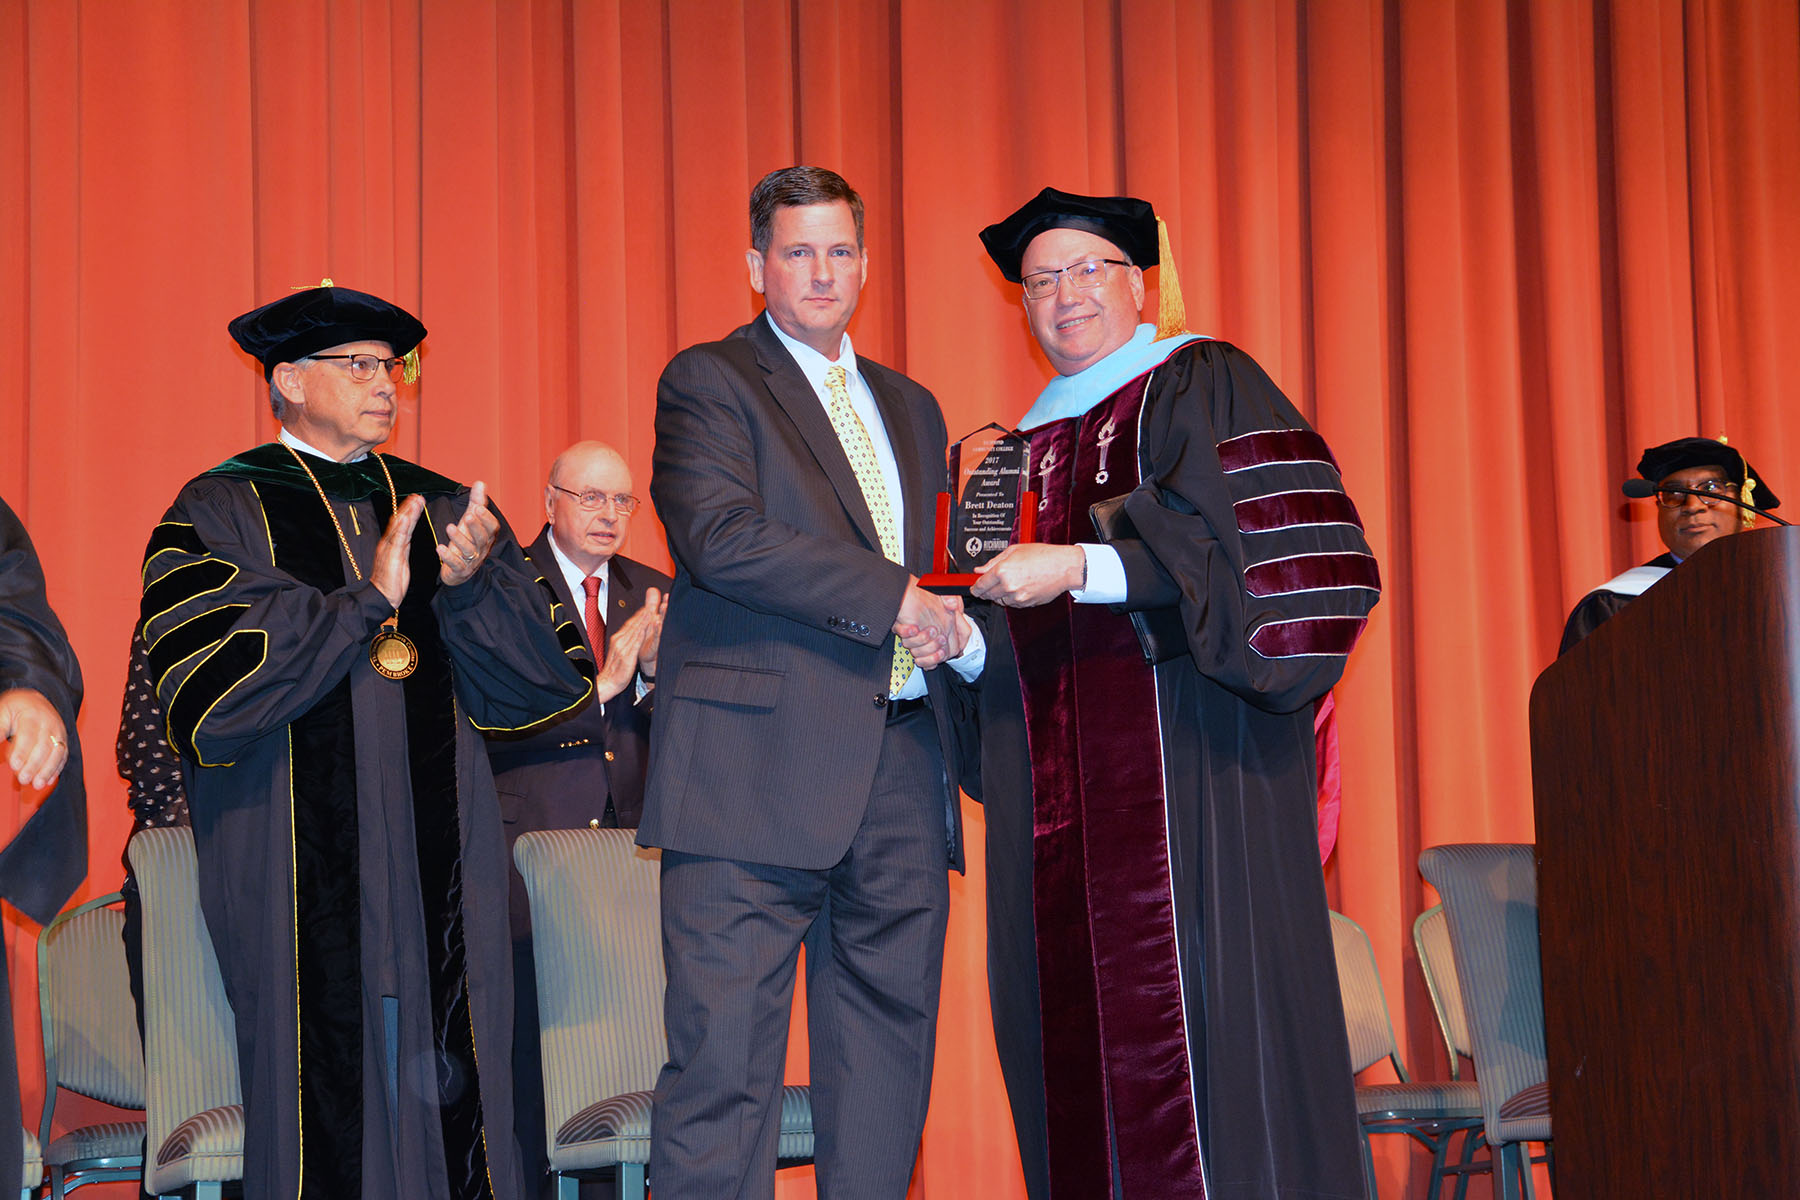 RichmondCC graduate Brett Deaton accepts the Outstanding Alumni Award from Dr. Dale McInnis